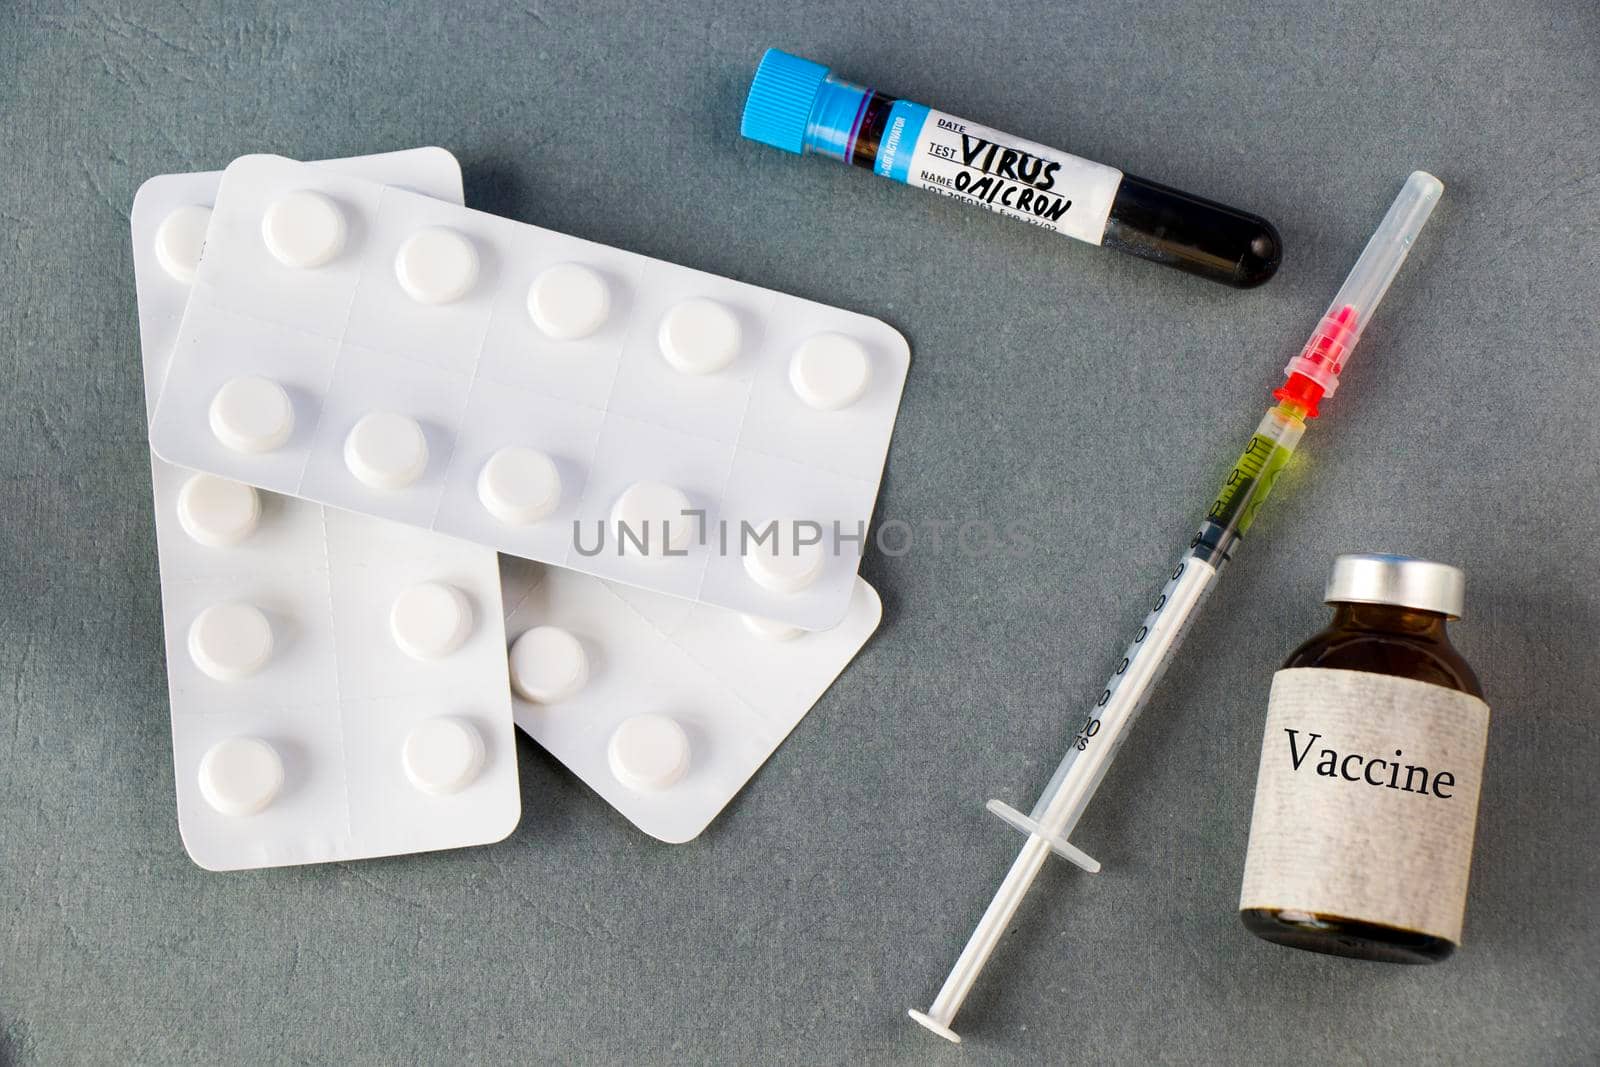 Omicron, corona virus variation.Vaccine ampule, needle, drugs and blood tube on the gray background, virus vaccine